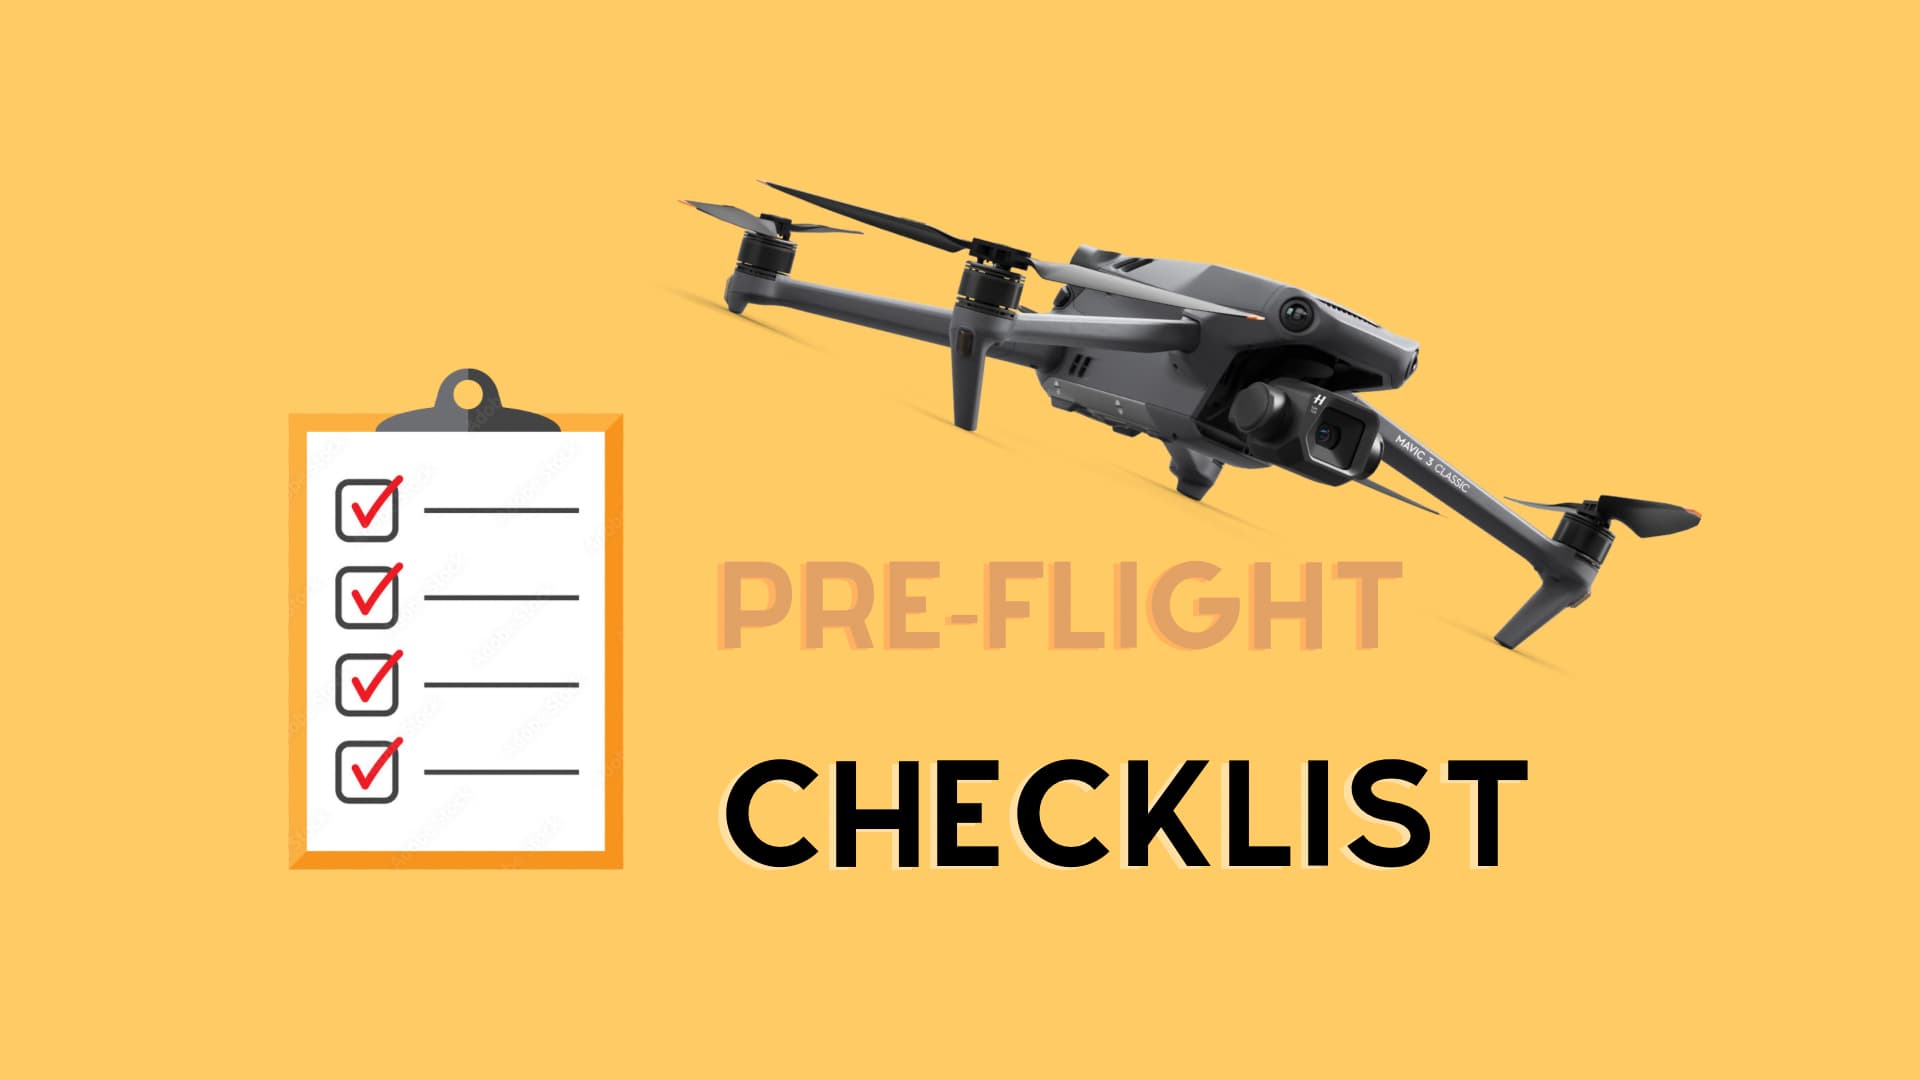 Drone flying pre-flight checklist.